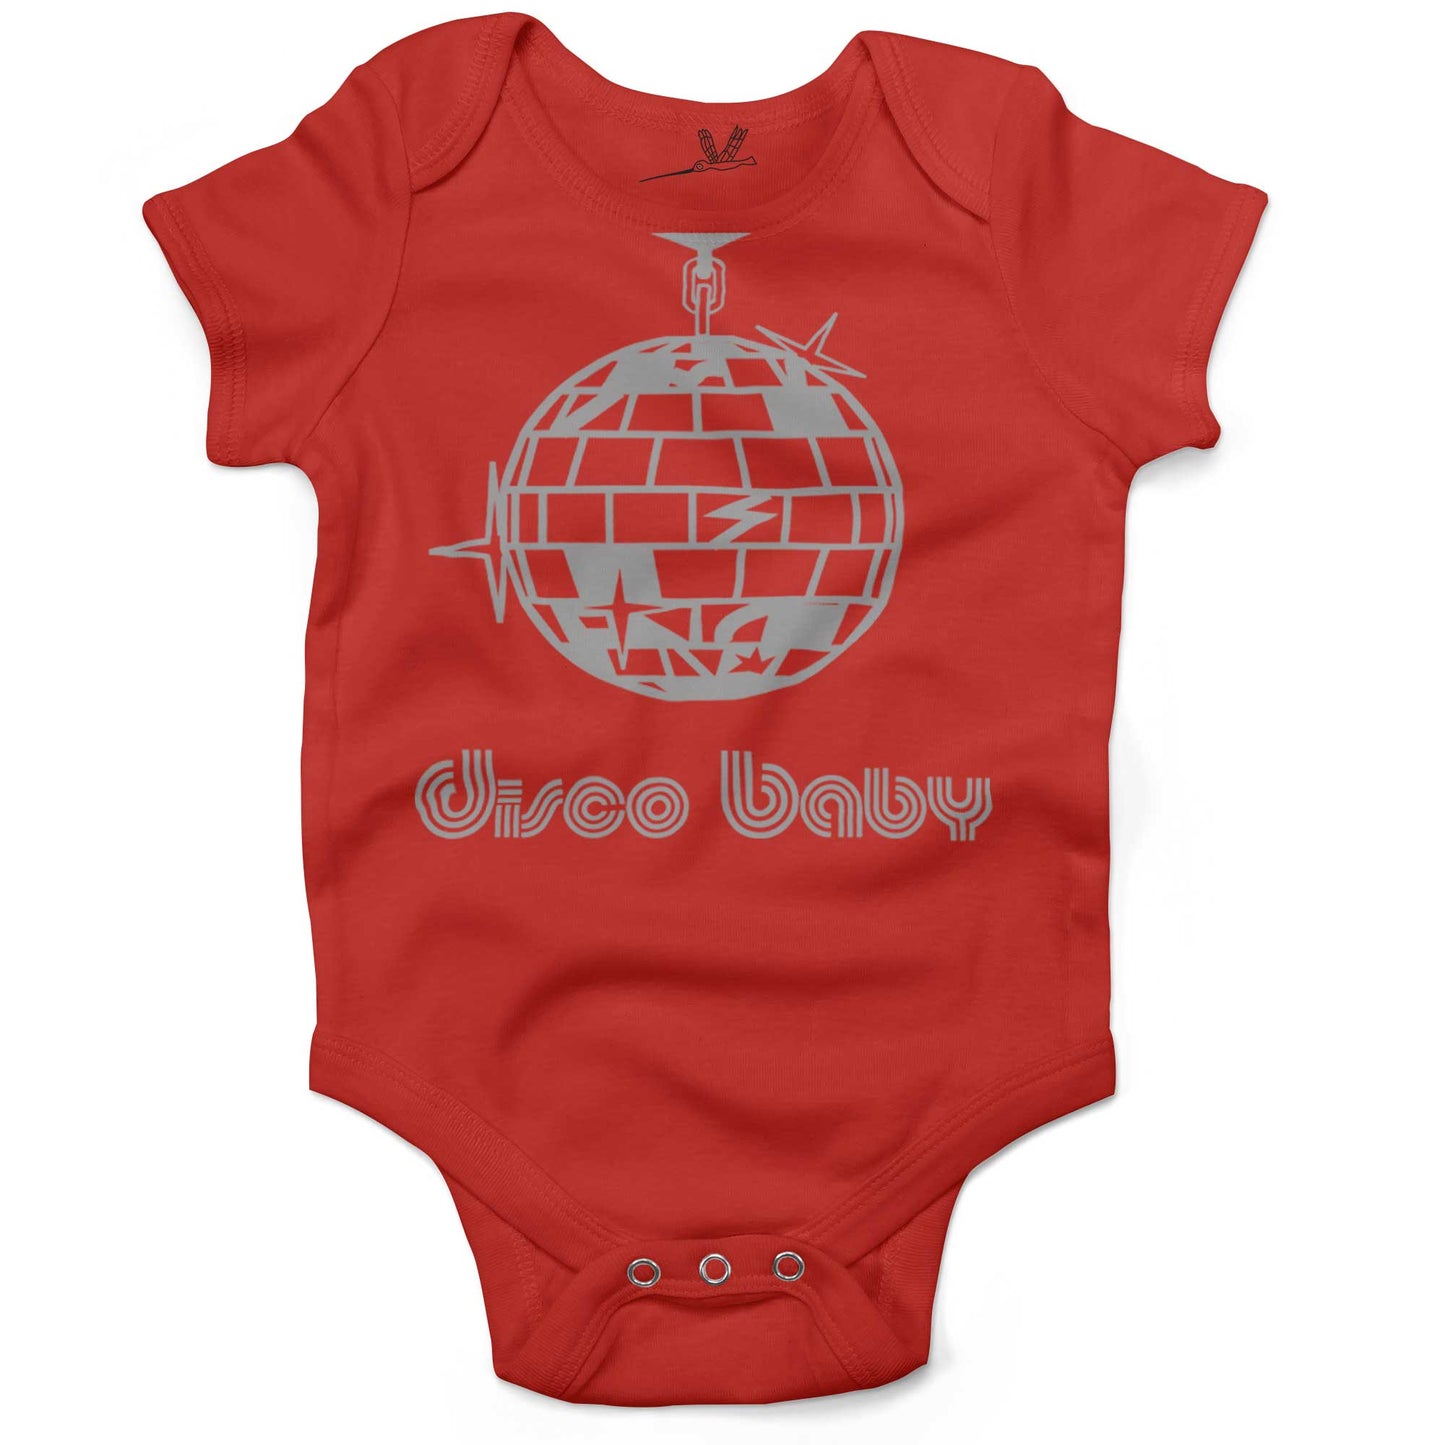 Disco Baby Infant Bodysuit or Raglan Tee-Organic Red-3-6 months